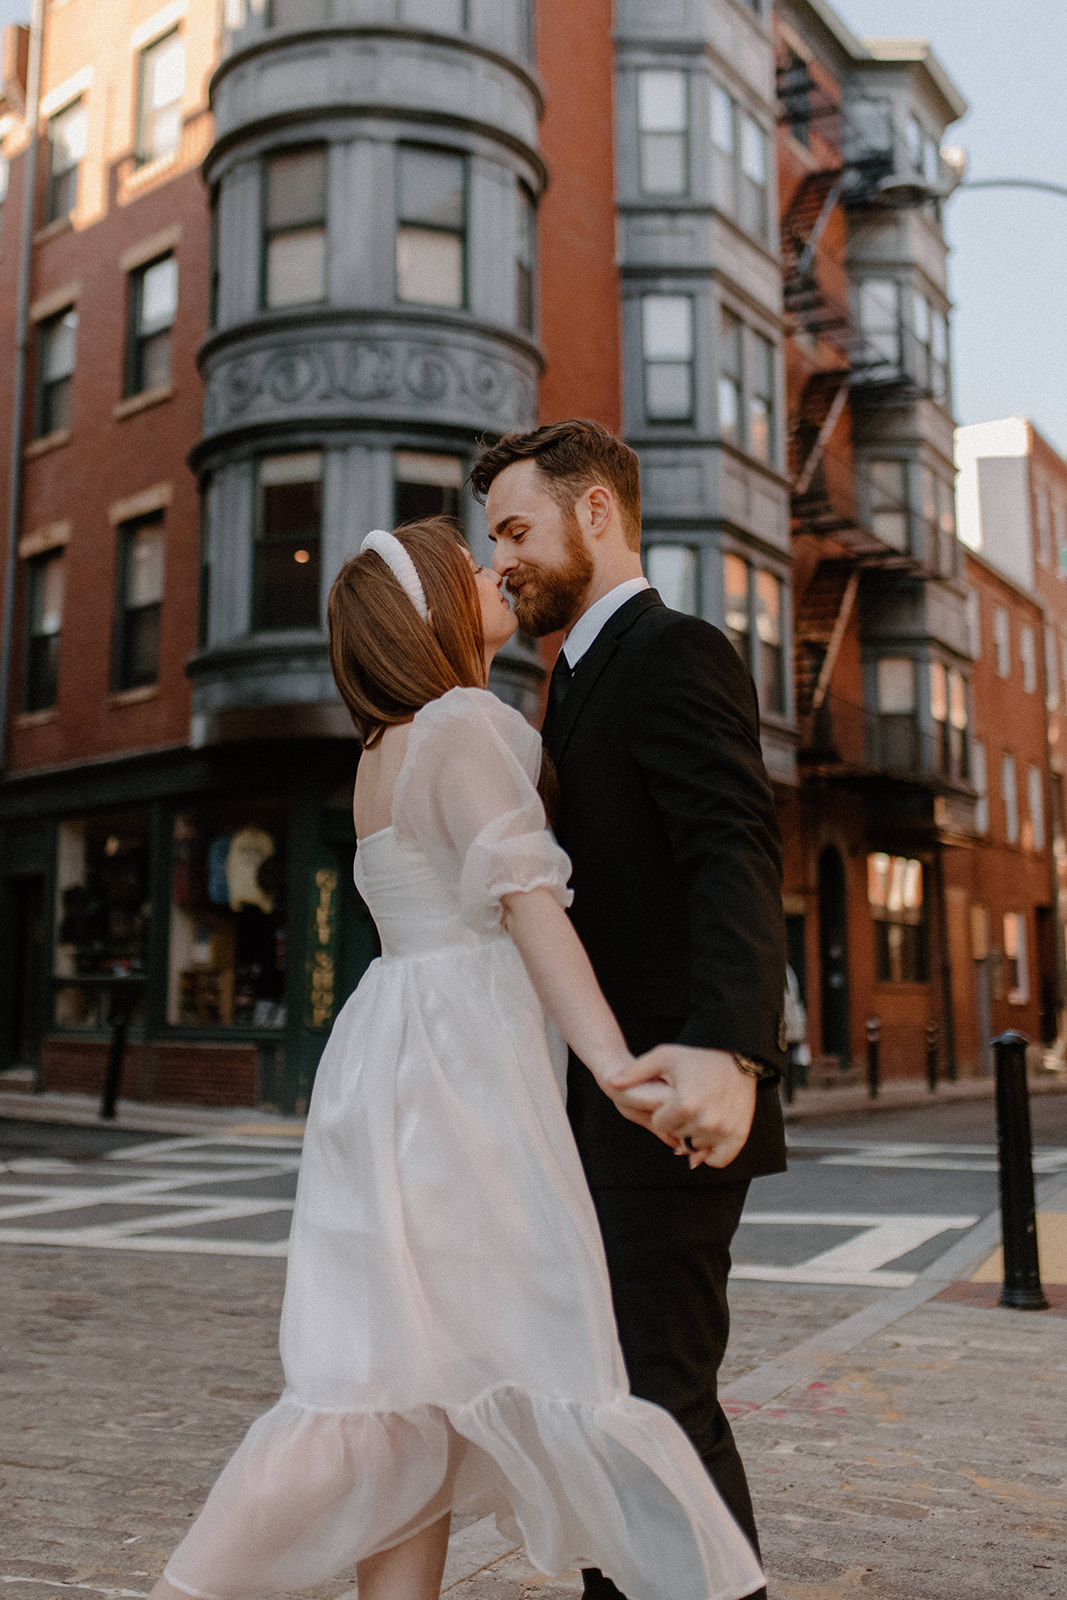 A downtown wedding In Boston